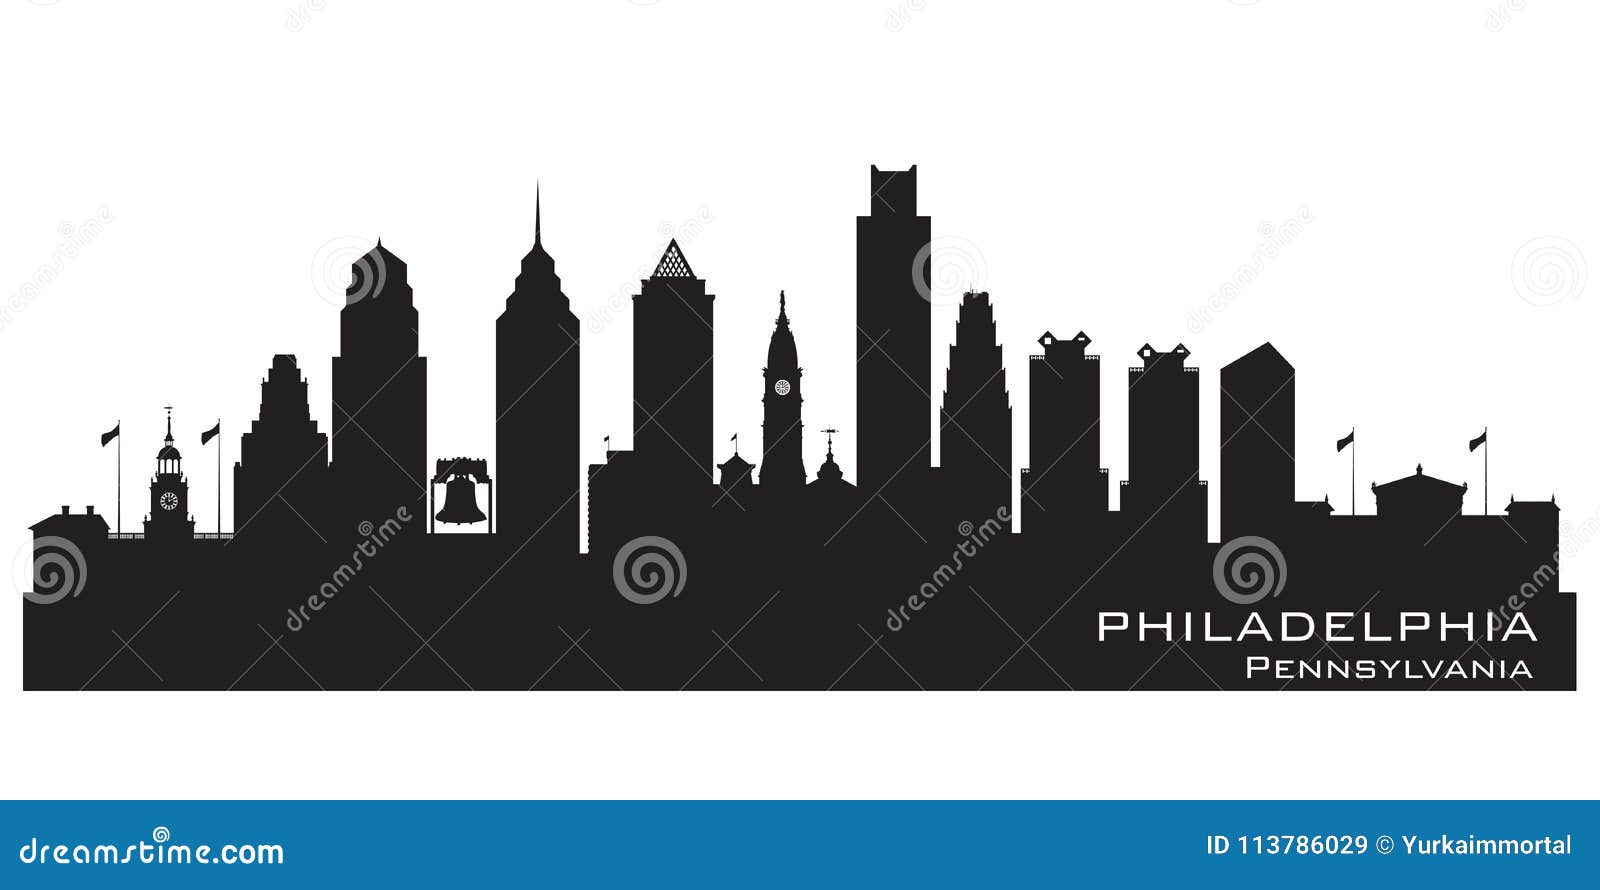 philadelphia pennsylvania city skyline  silhouette